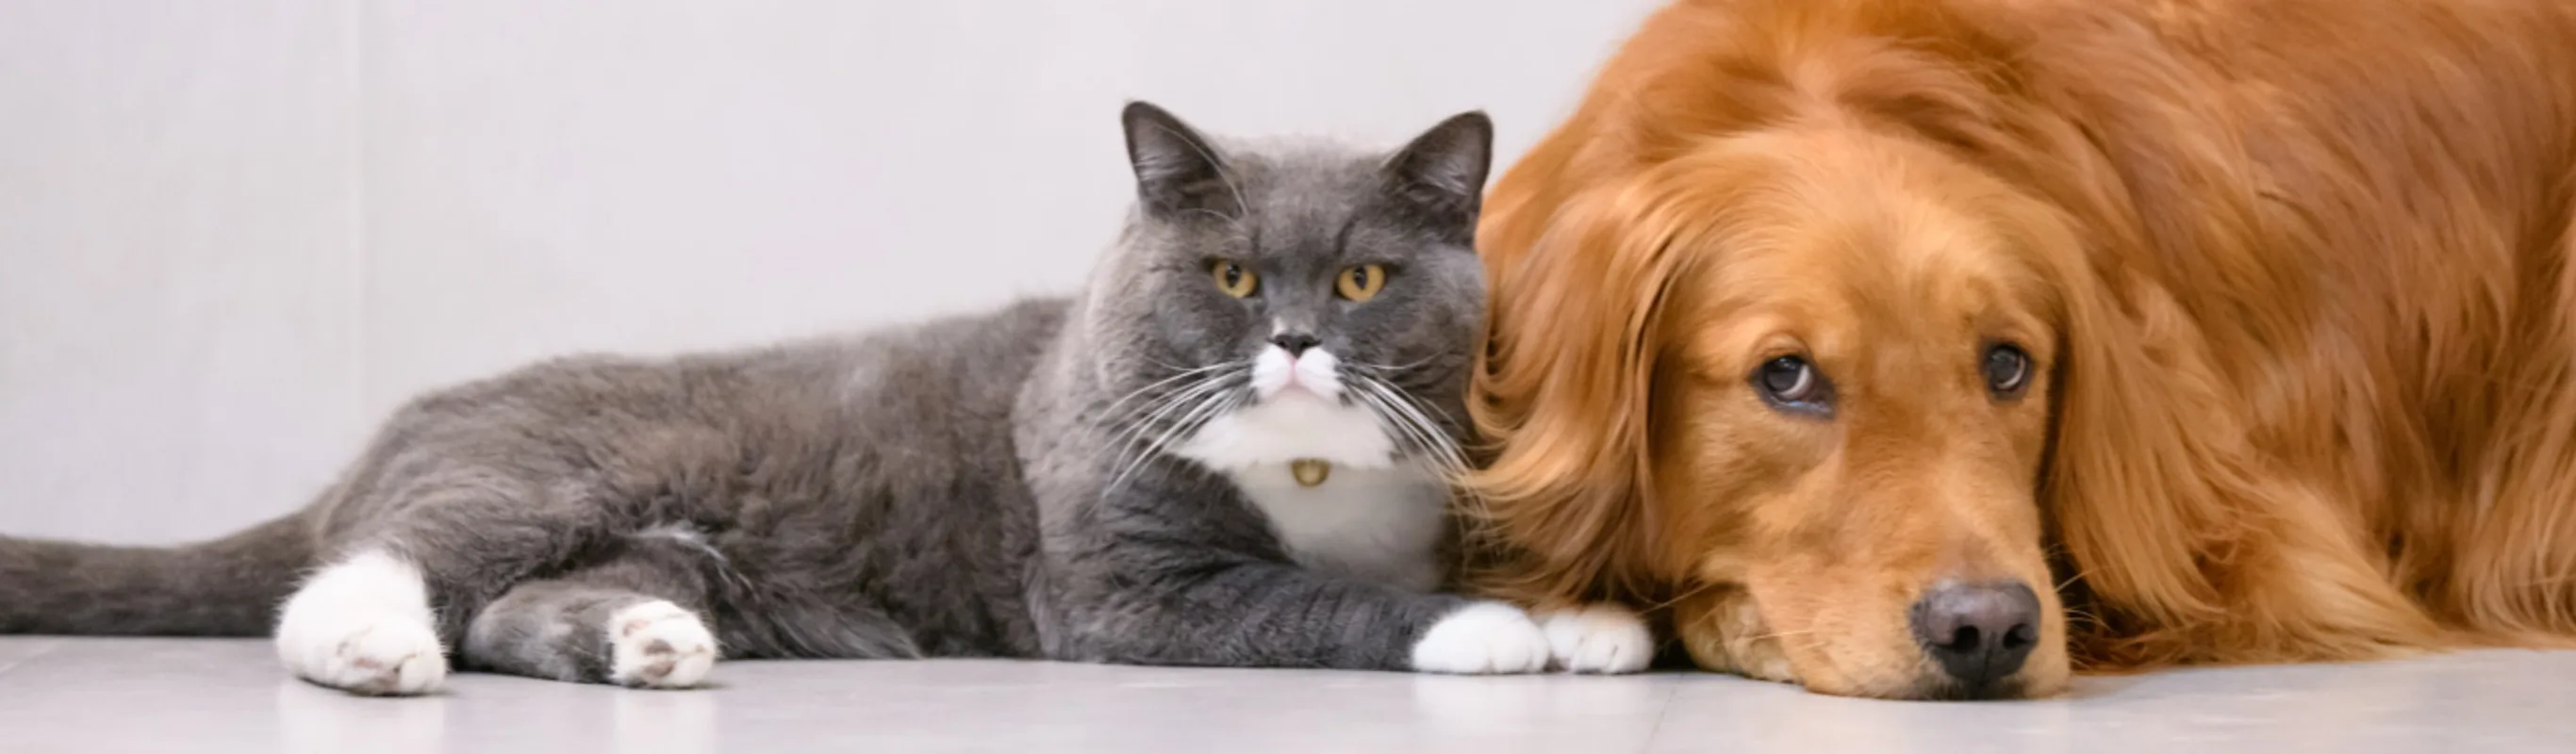 Gray Cat Laying Next to Orange Dog